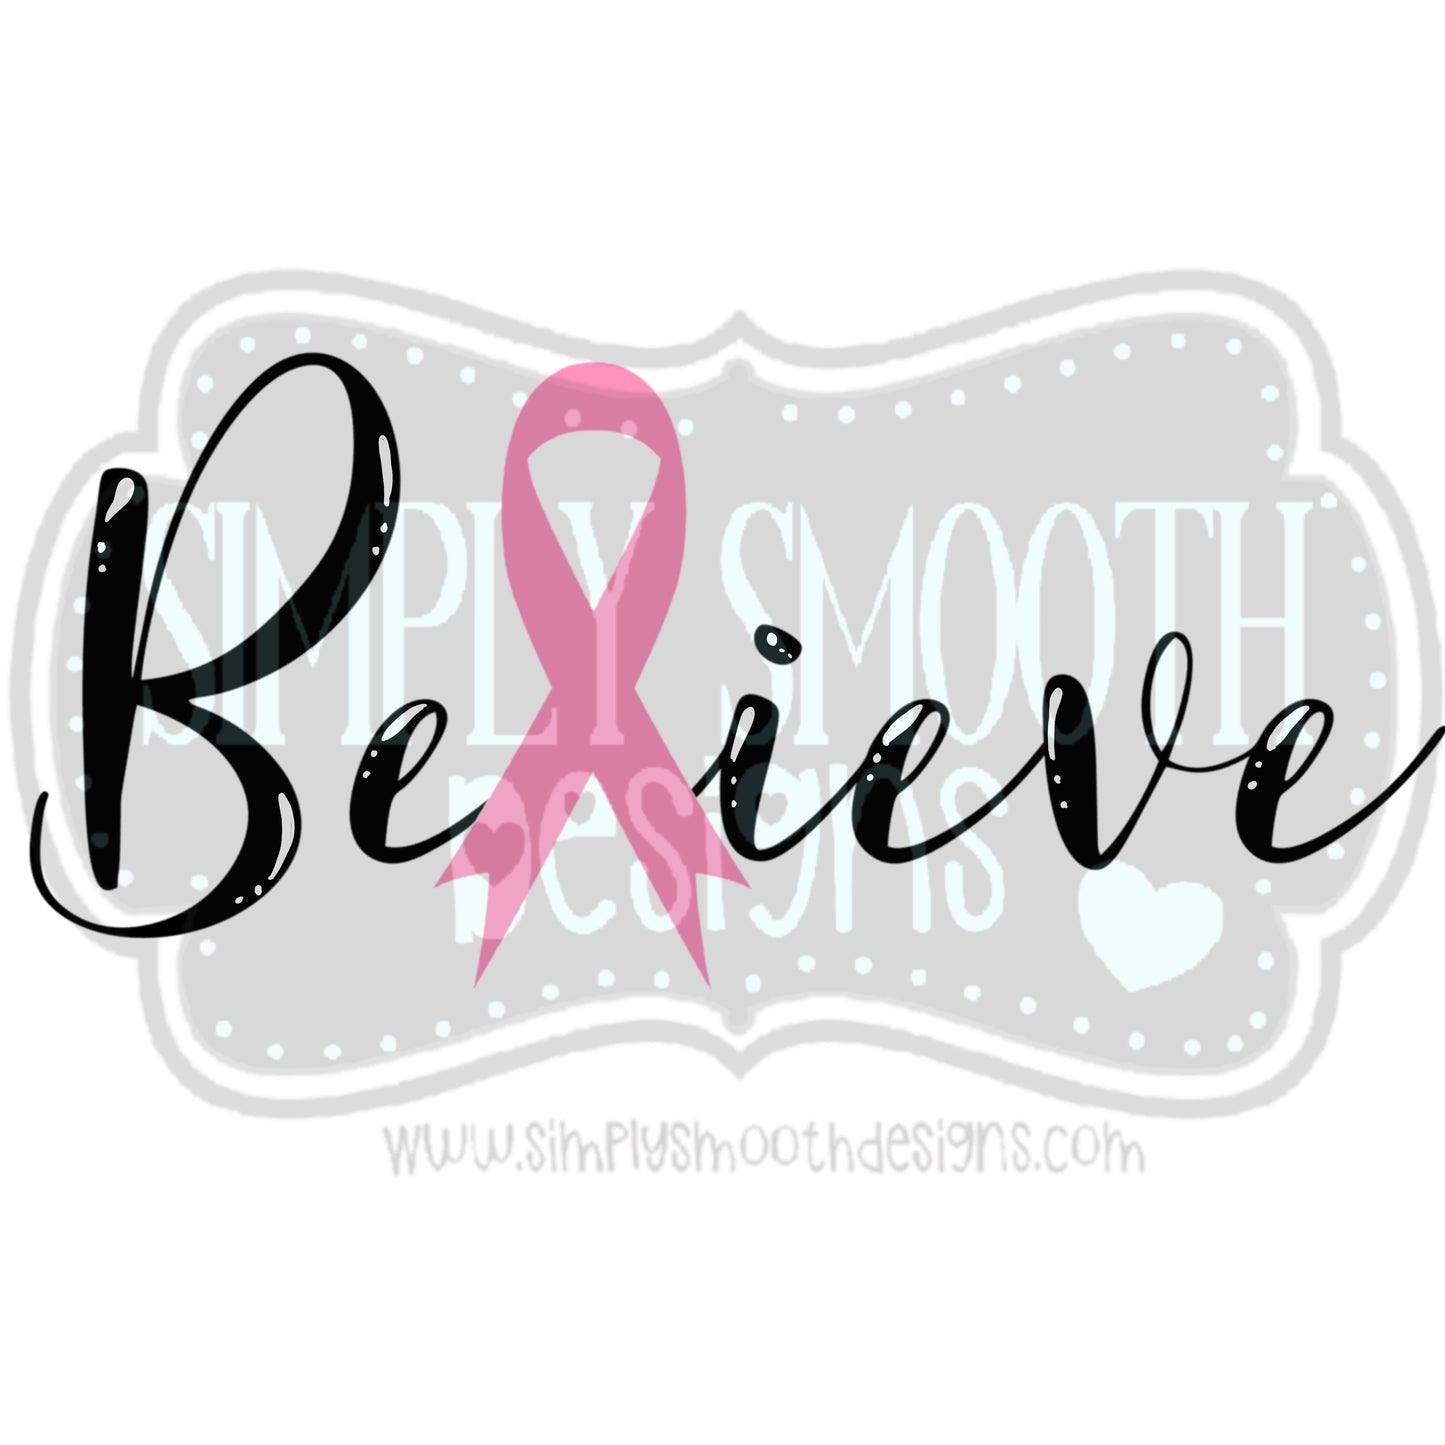 Believe Breast Cancer Awareness